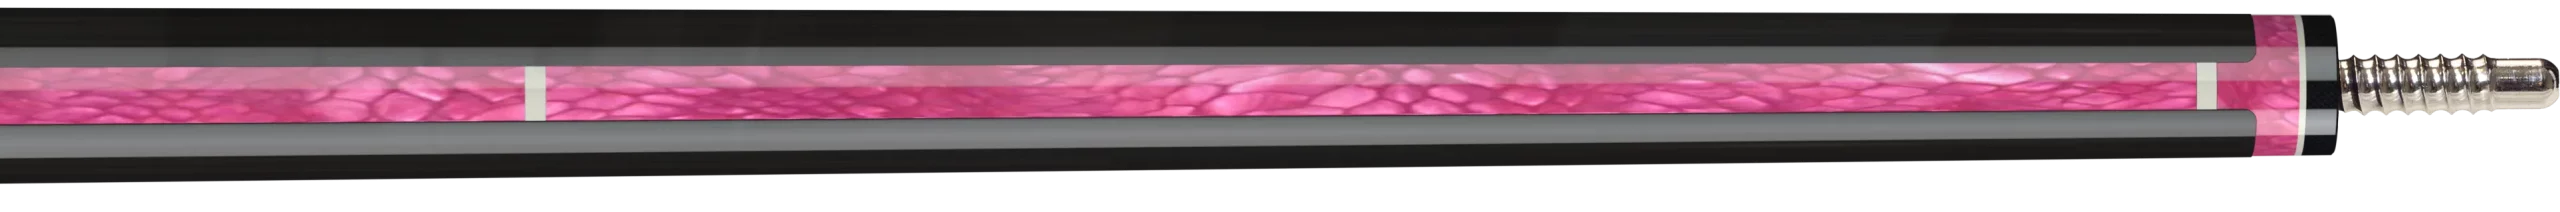 std 2024 - kuro - cmi-4 - pink dragon - molinari billiards carbon cue - joint